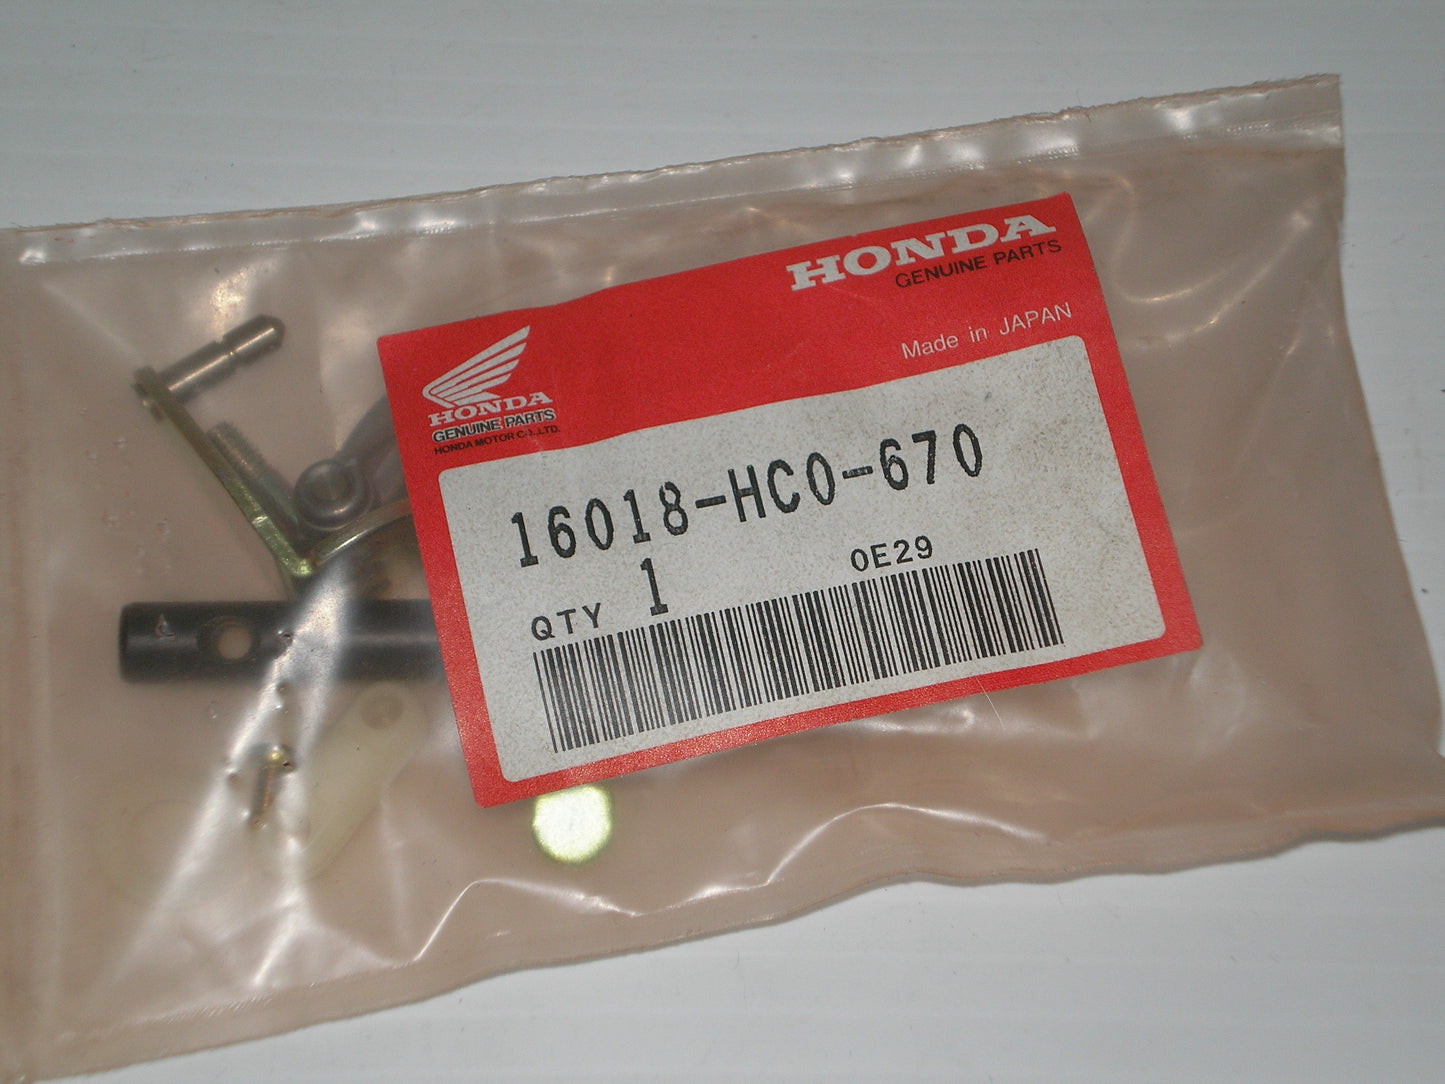 HONDA TRX250 TRX300 1992-1998 Carburetor Arm Set Link Kit 16018-HC0-670